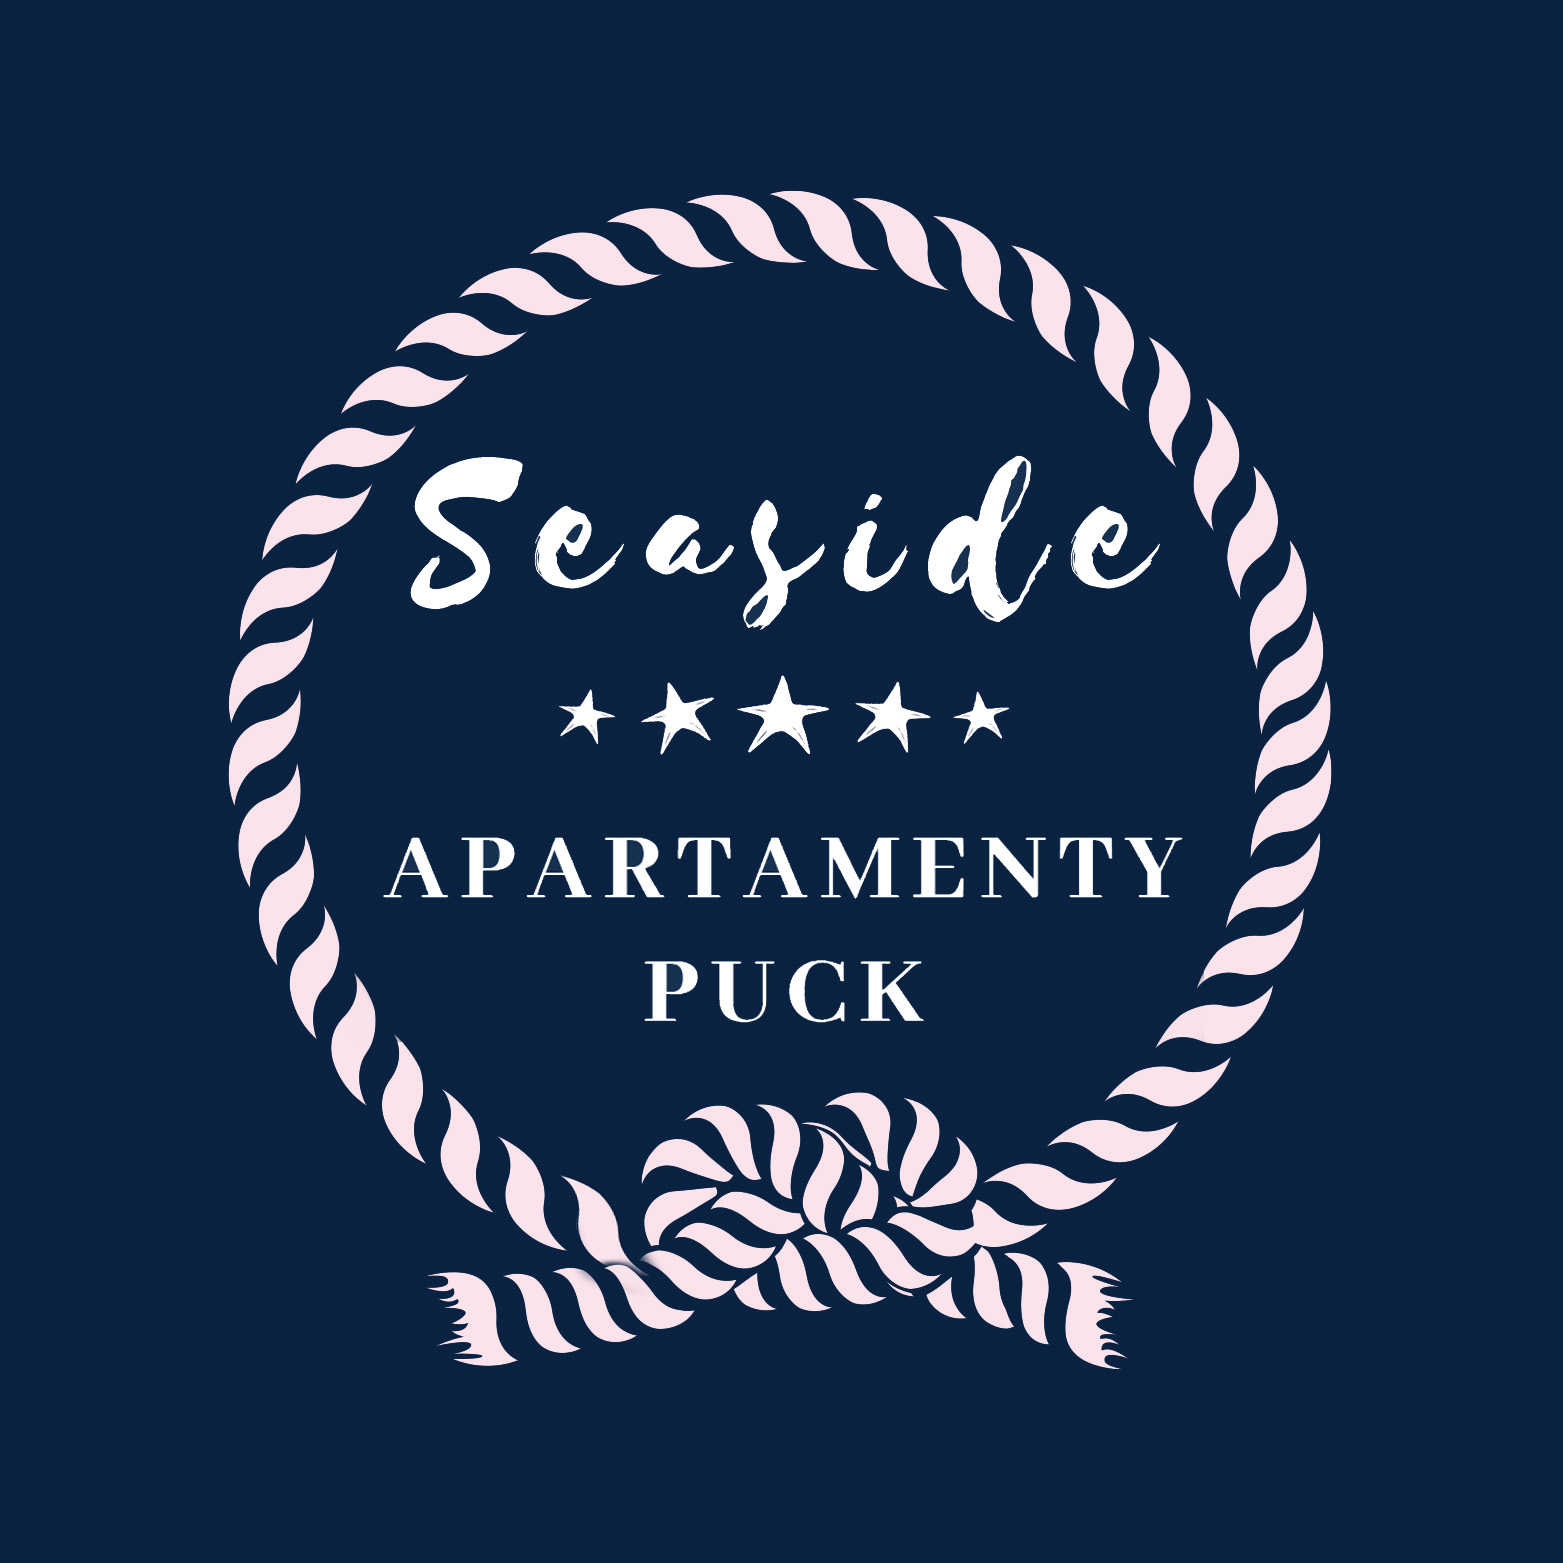 Seaside Apartamenty Puck